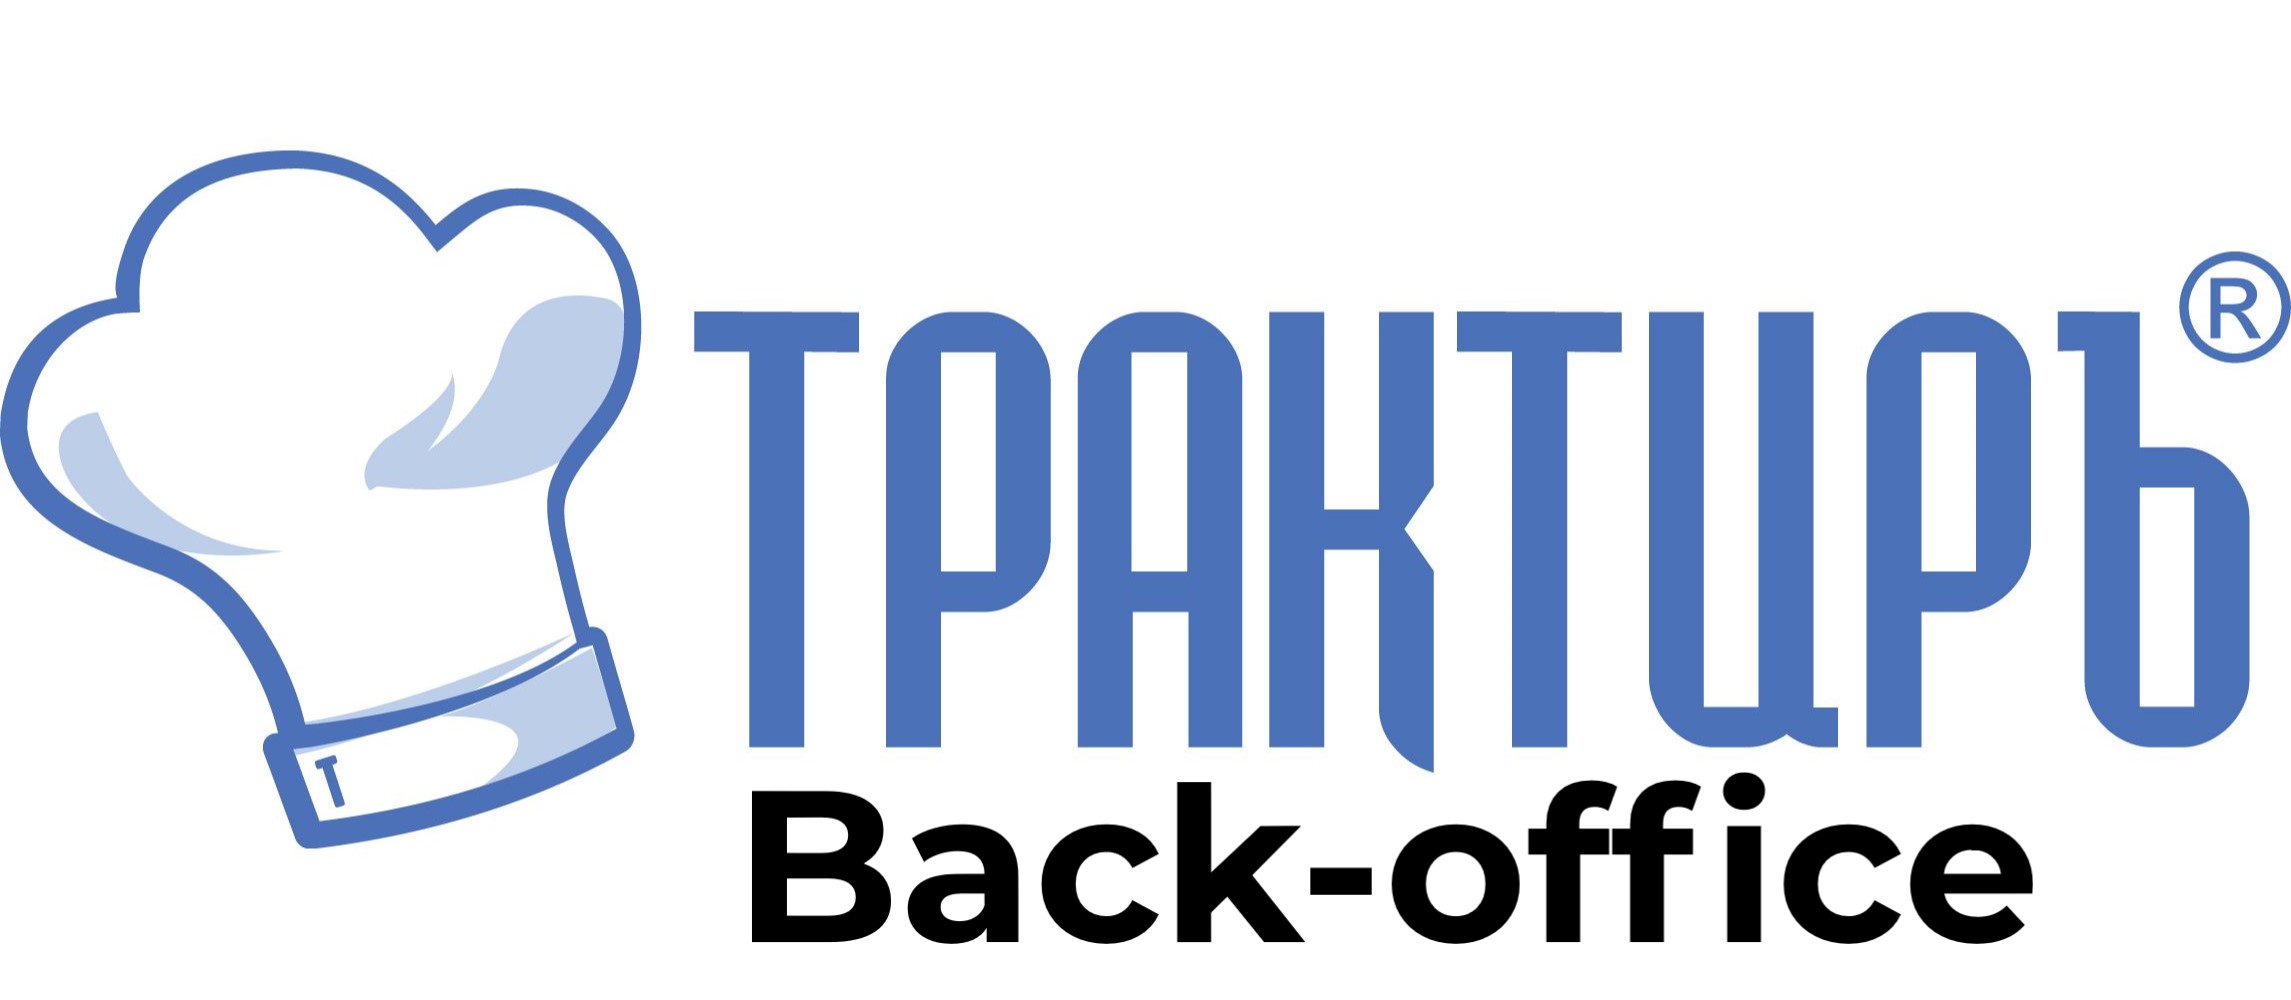 Трактиръ Back-Office ПРОФ, ред. 3.0 Основная поставка в Орле